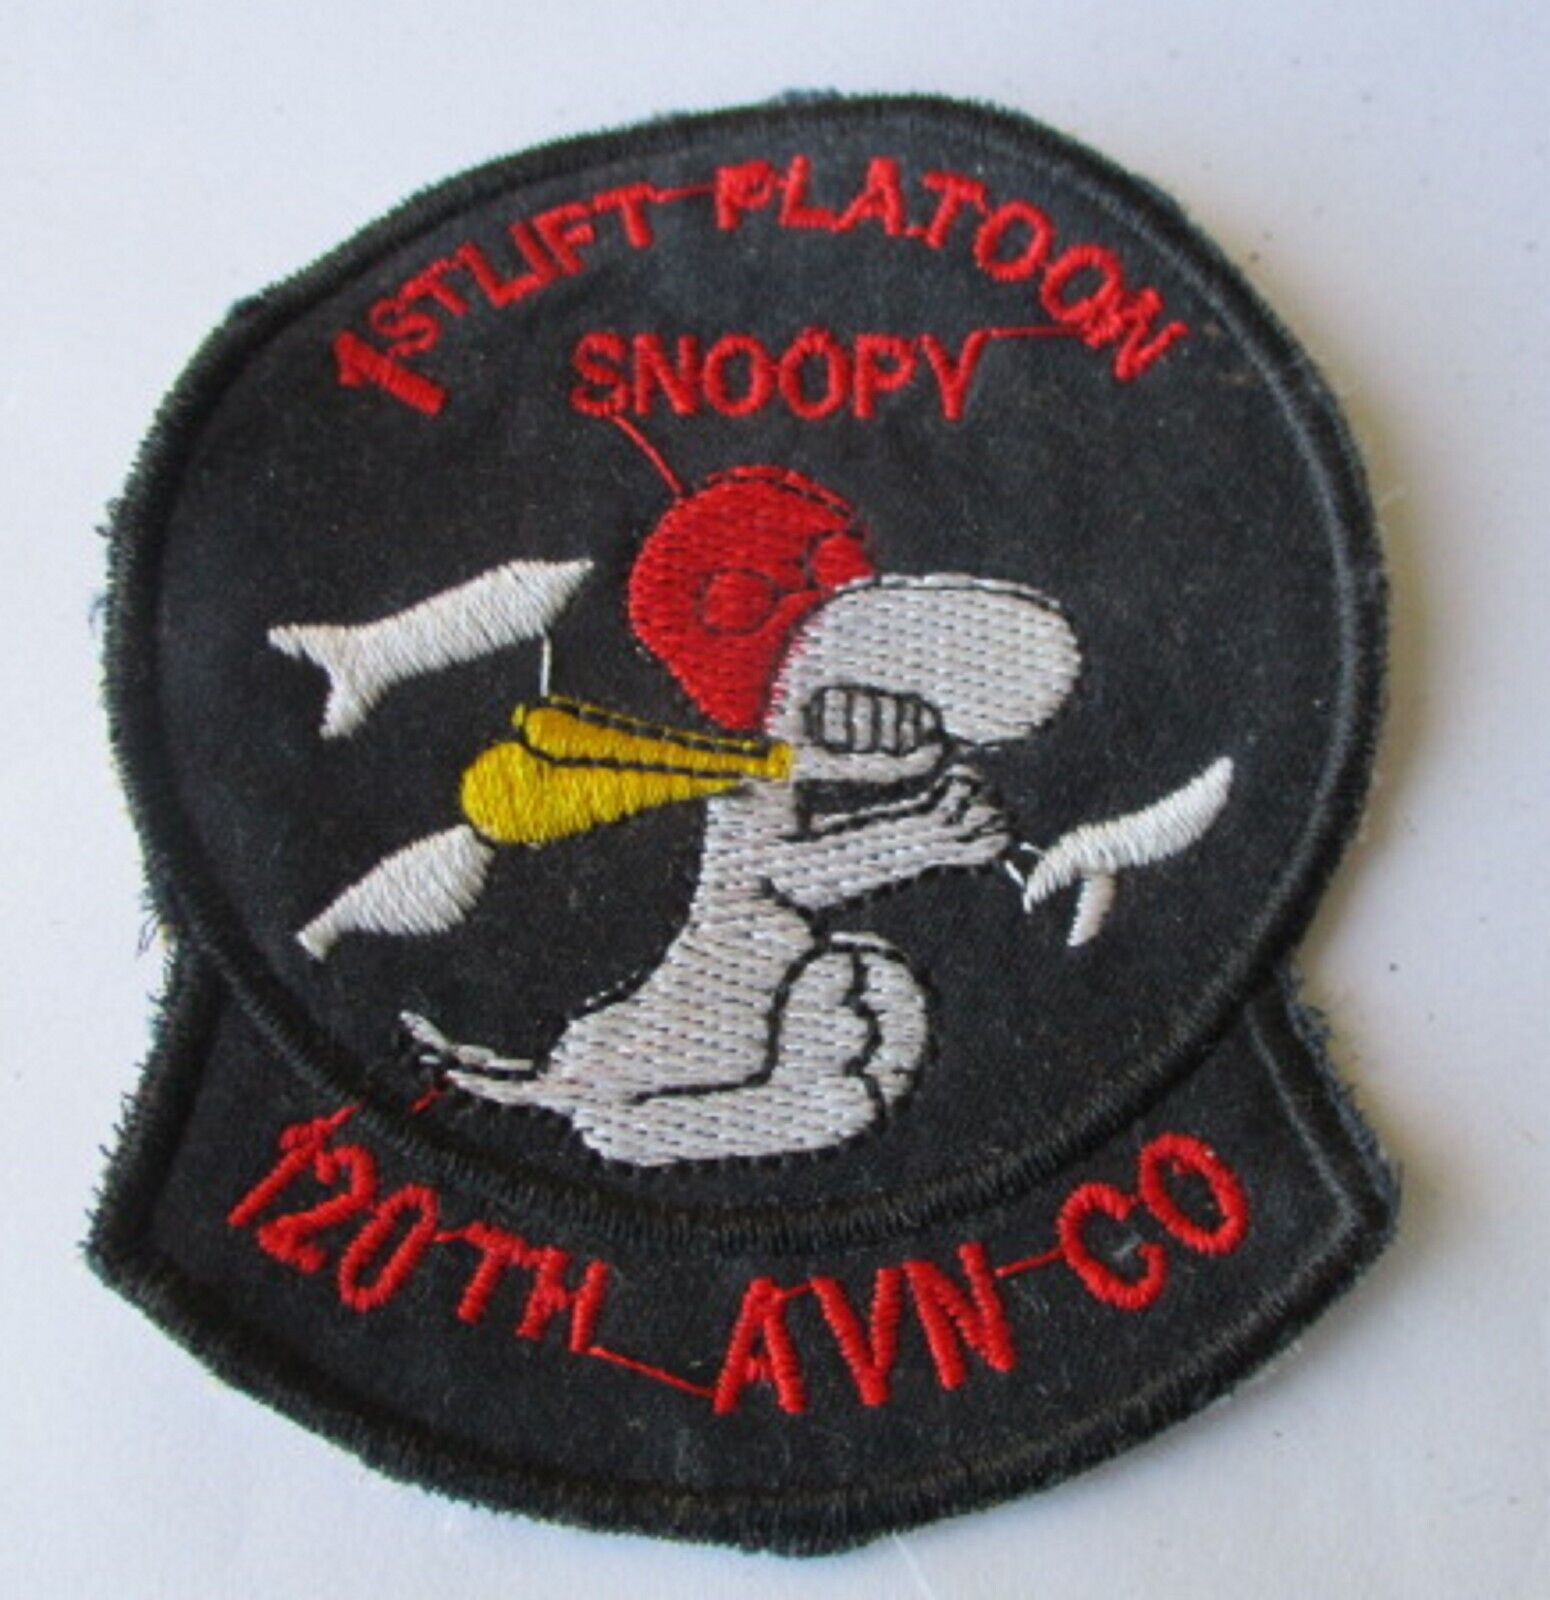 SNOOPPY 1st LIFT PLATOON 120th AVN COMPANY VINTAGE VIETNAM WAR PATCH